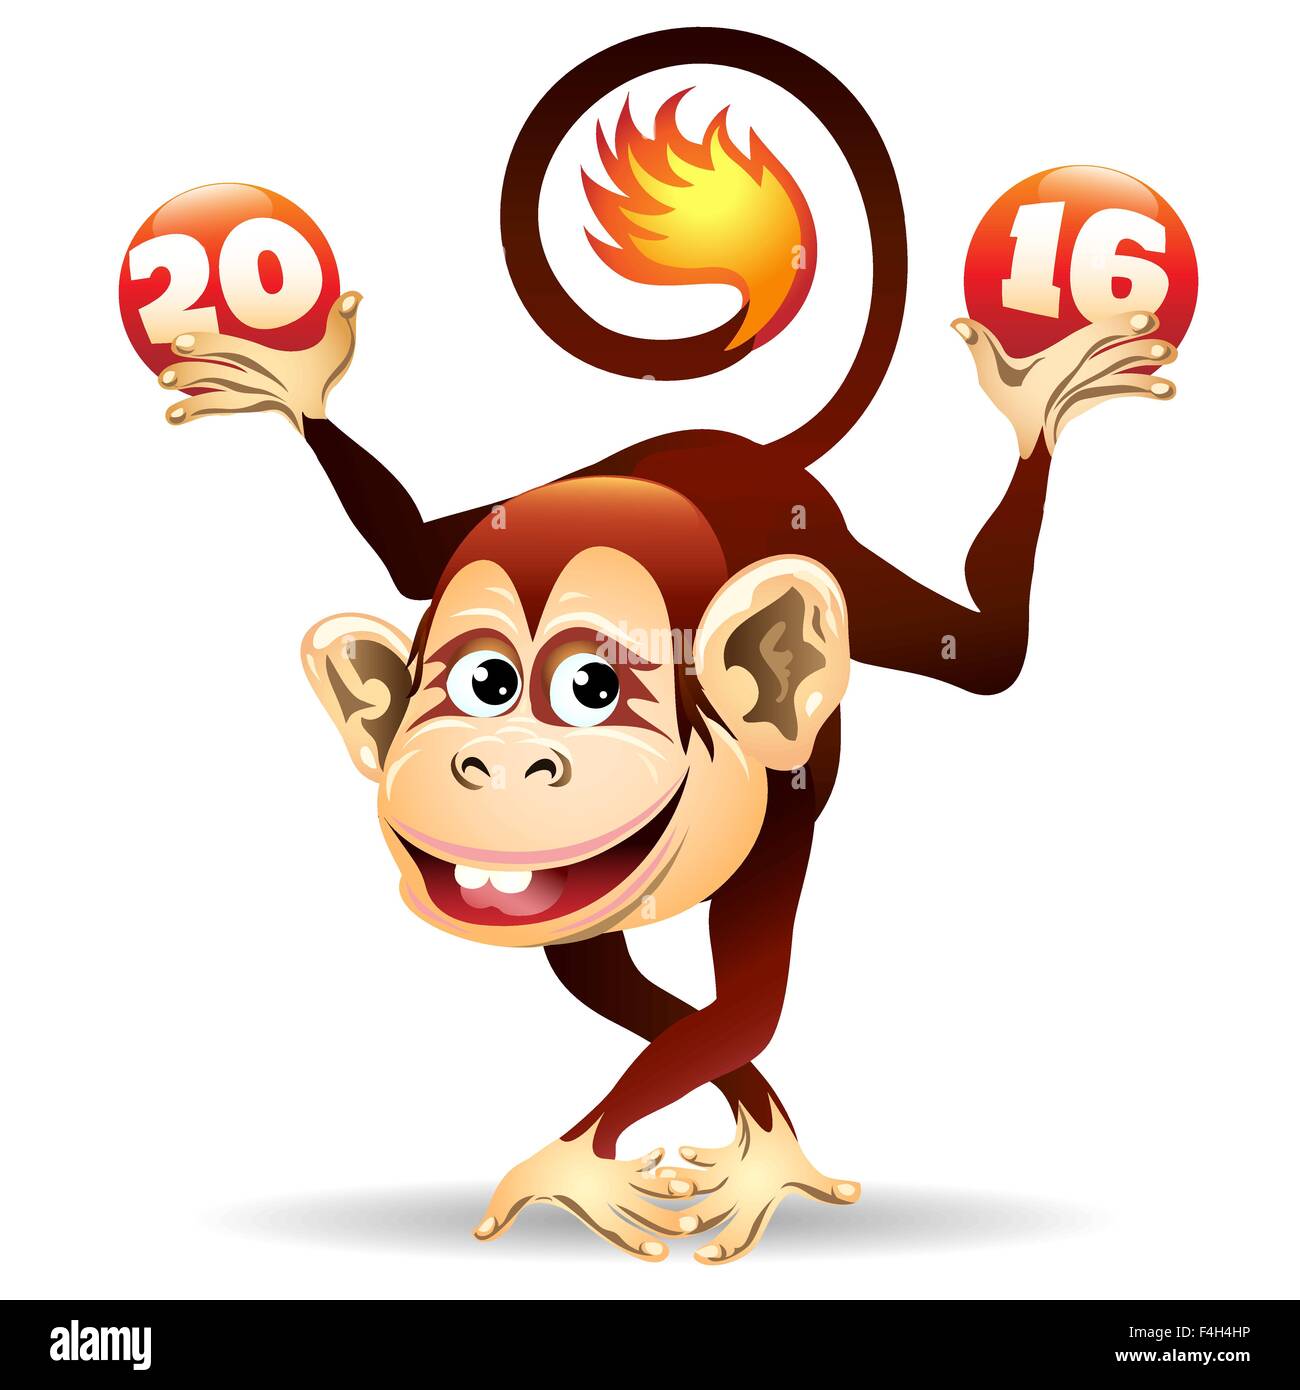 Symbol of 2016 year Fire Monkey.Cartoon illustration. Isolated on white. Stock Vector